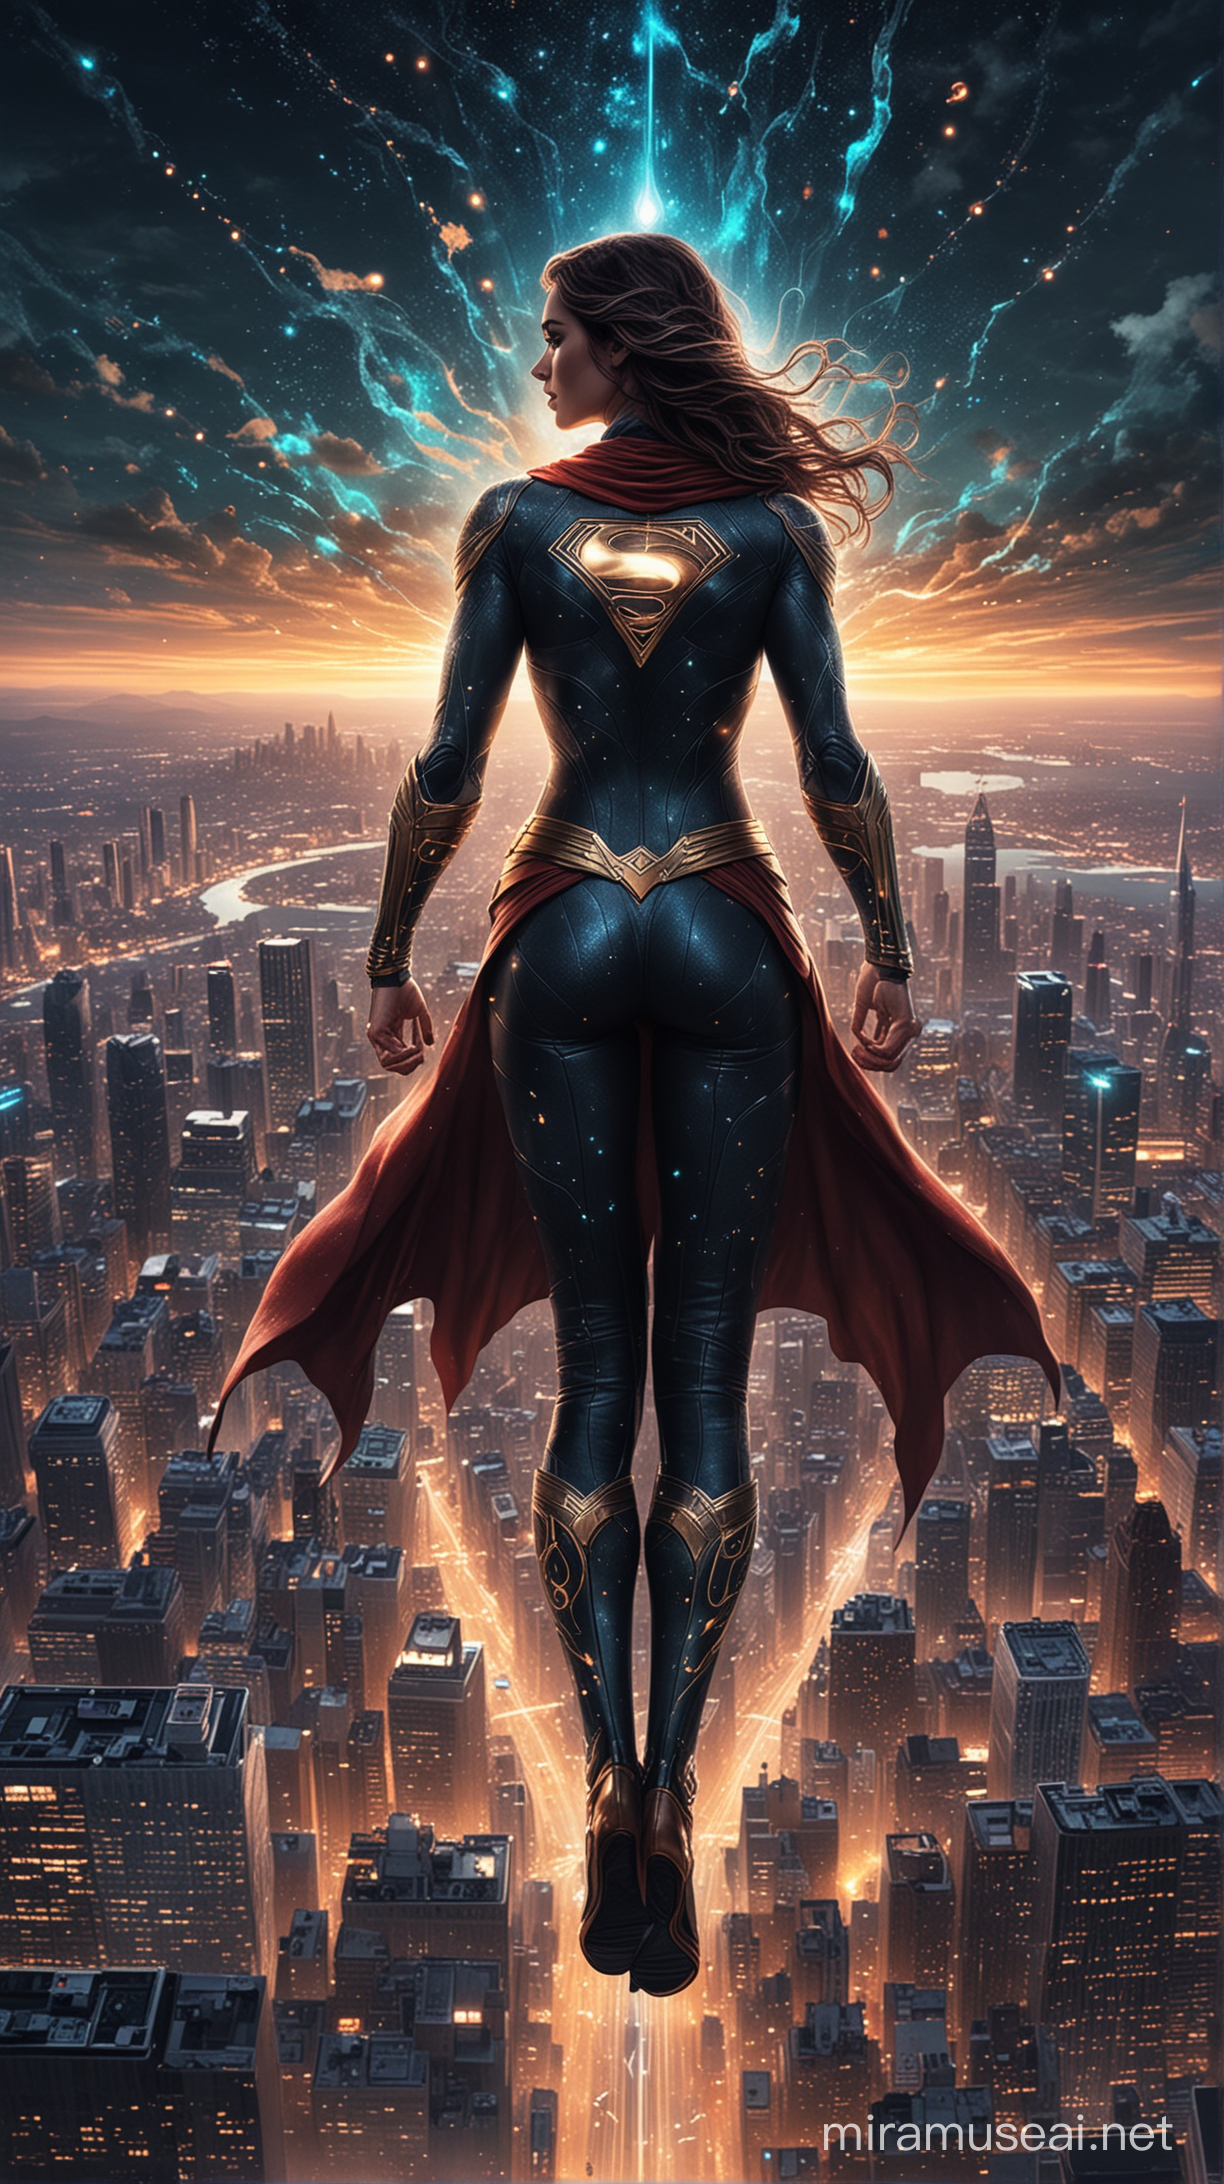 Ethereal Superhero Watching Over Cityscape with Cosmic Glow